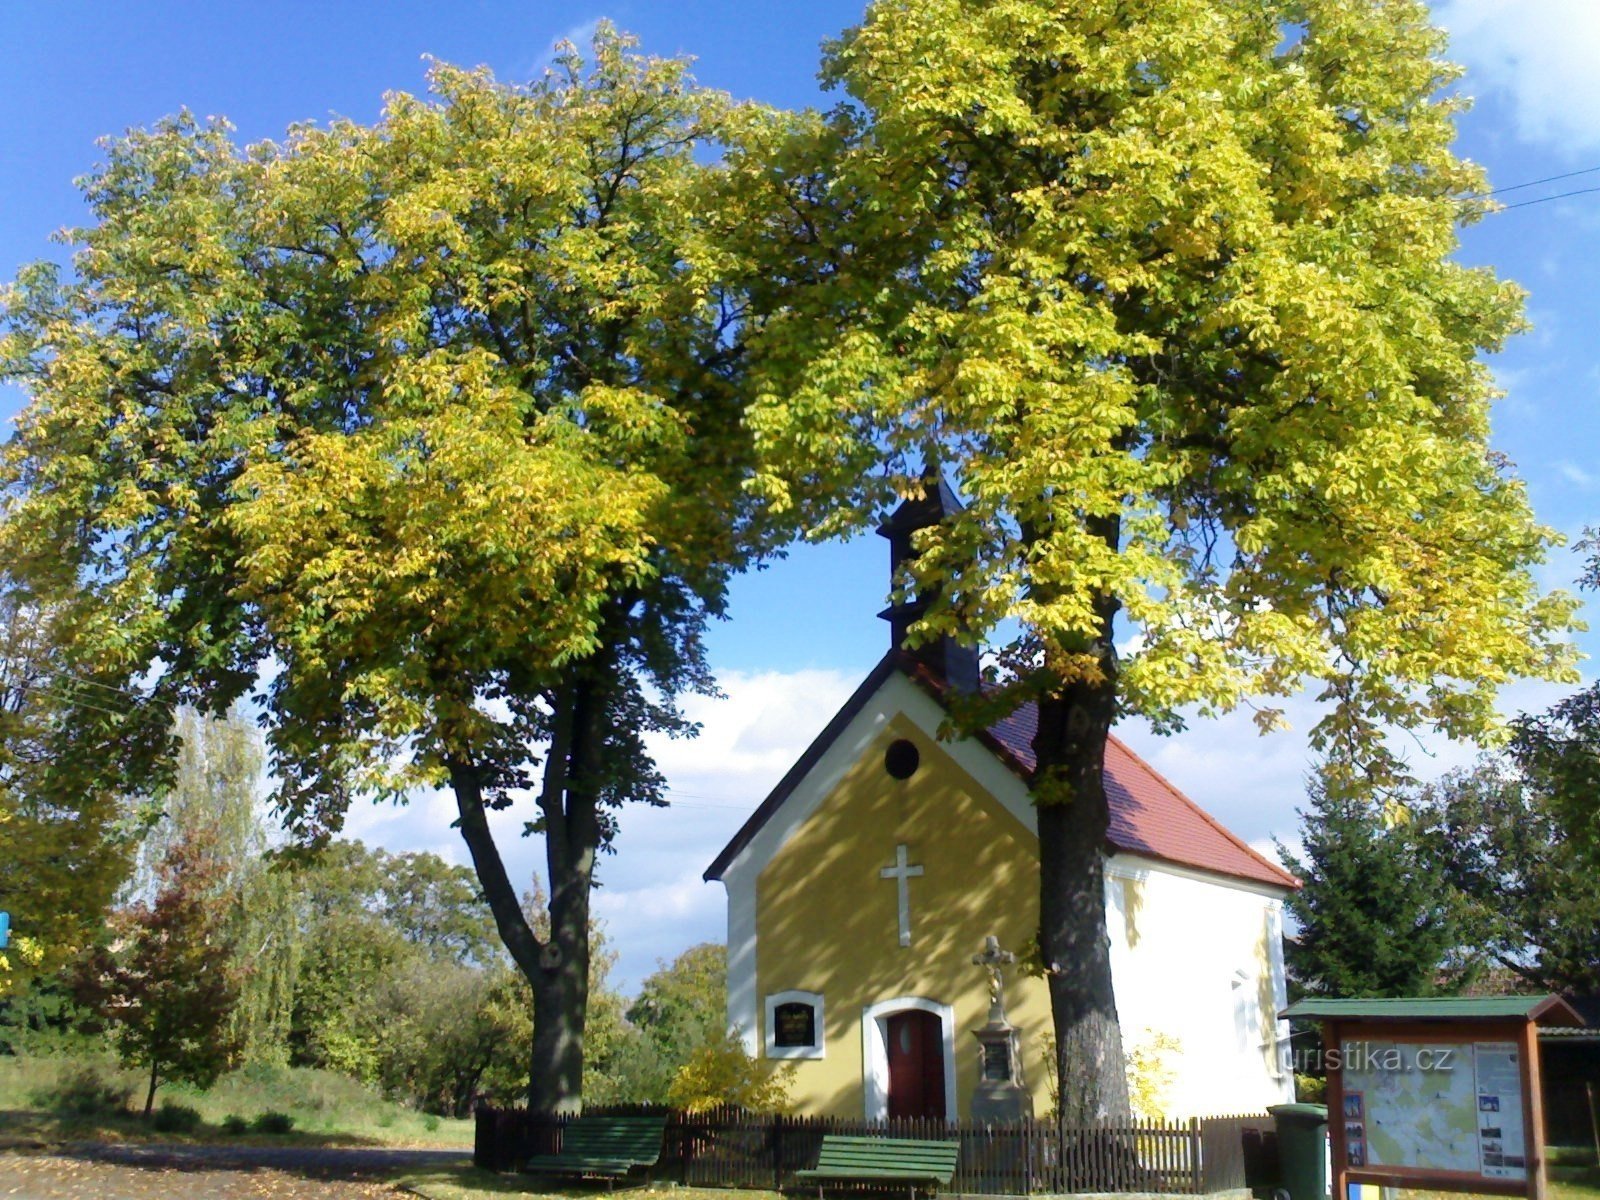 Ježkovice korsning nära kapellet